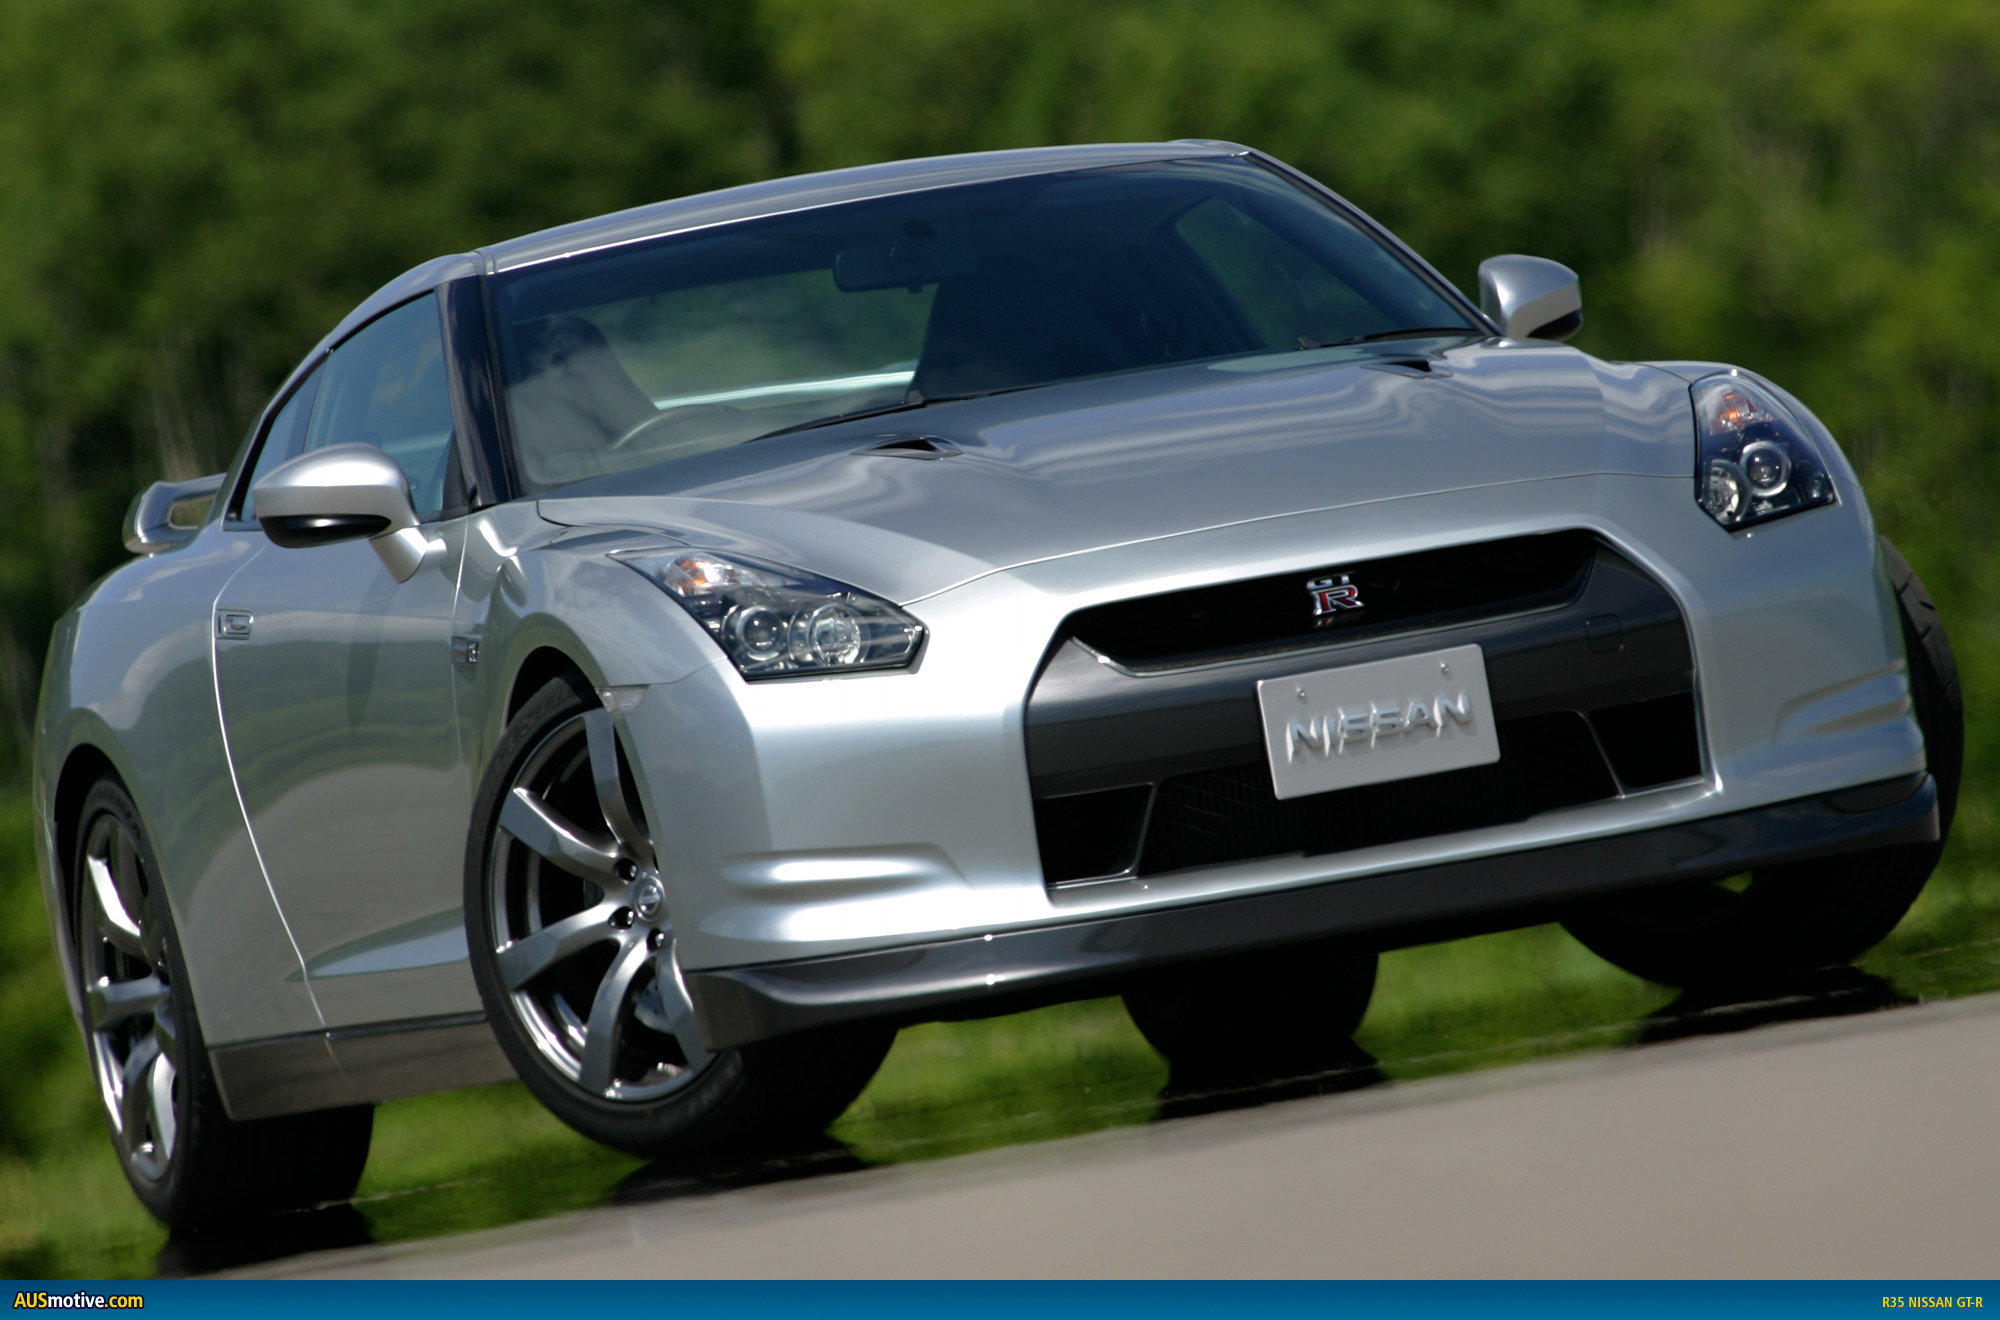 AUSmotive.com » Nissan GT-R – The budget supercar, or is it?